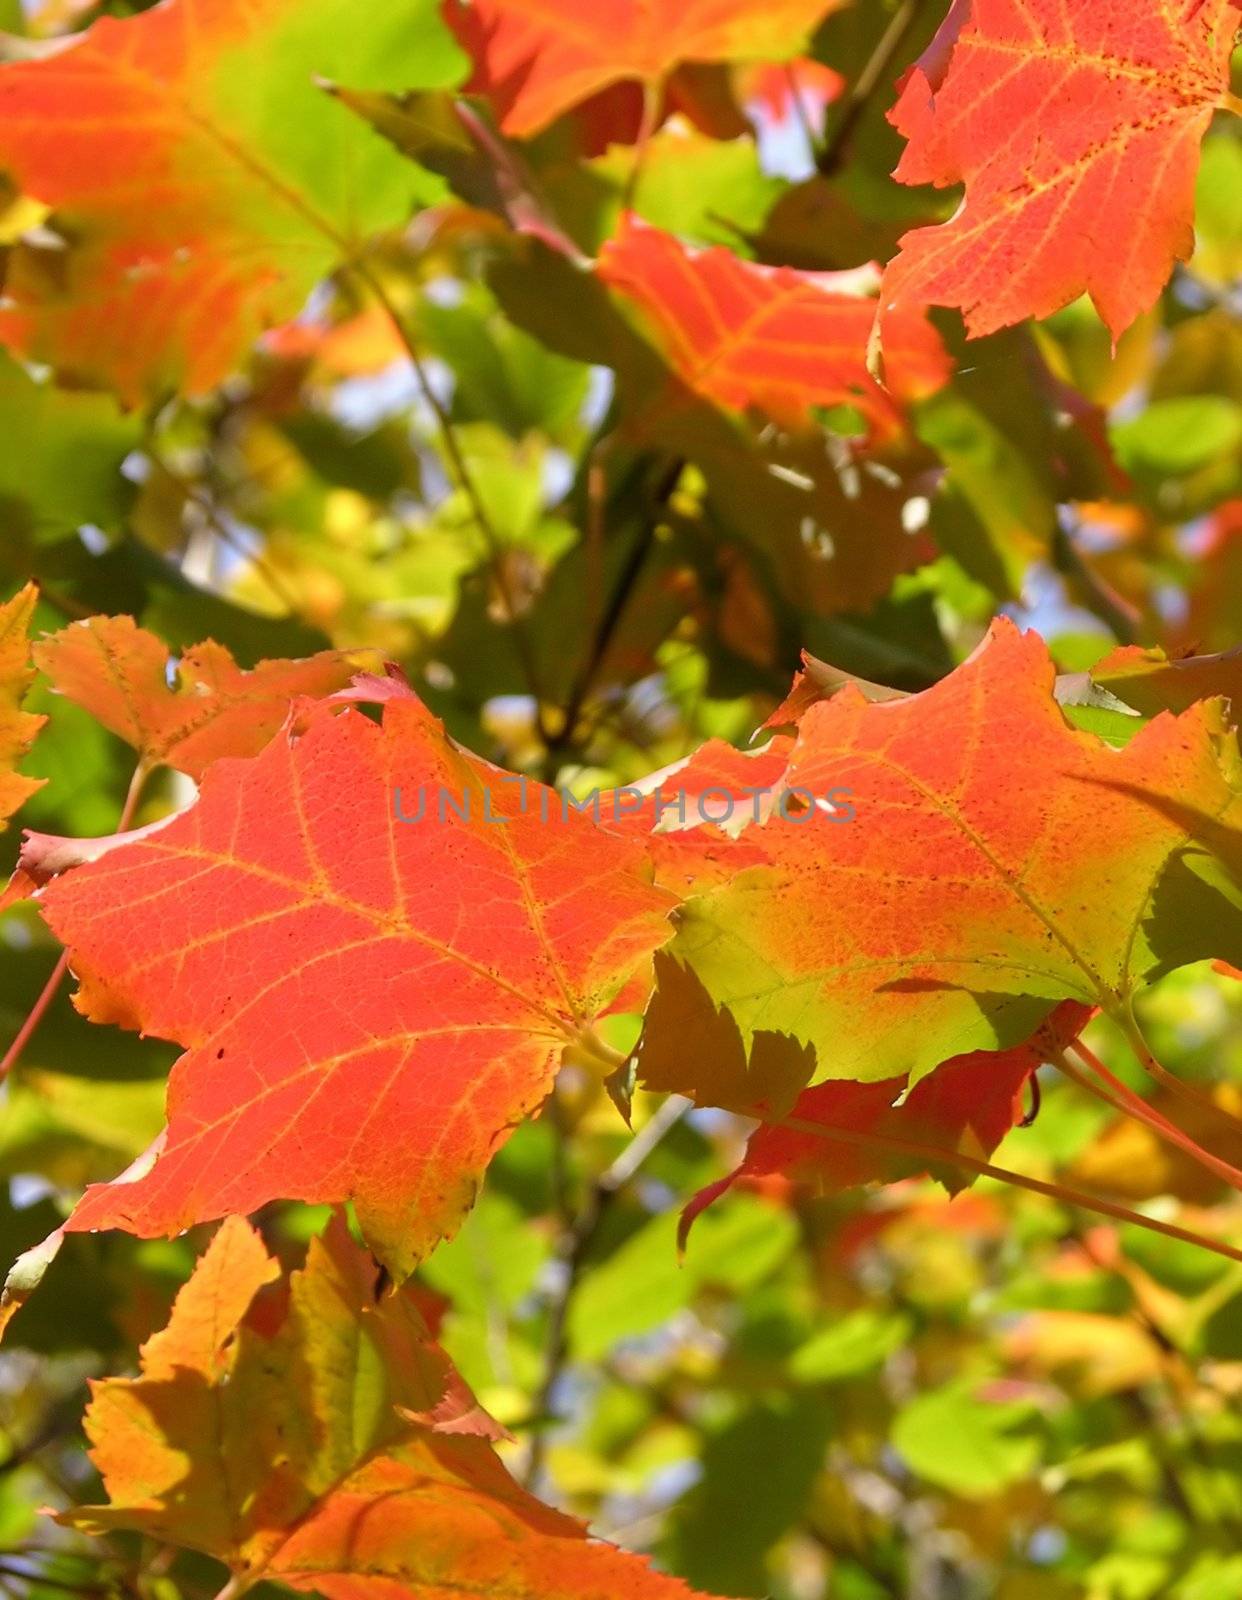 Fall leaves by rbiedermann